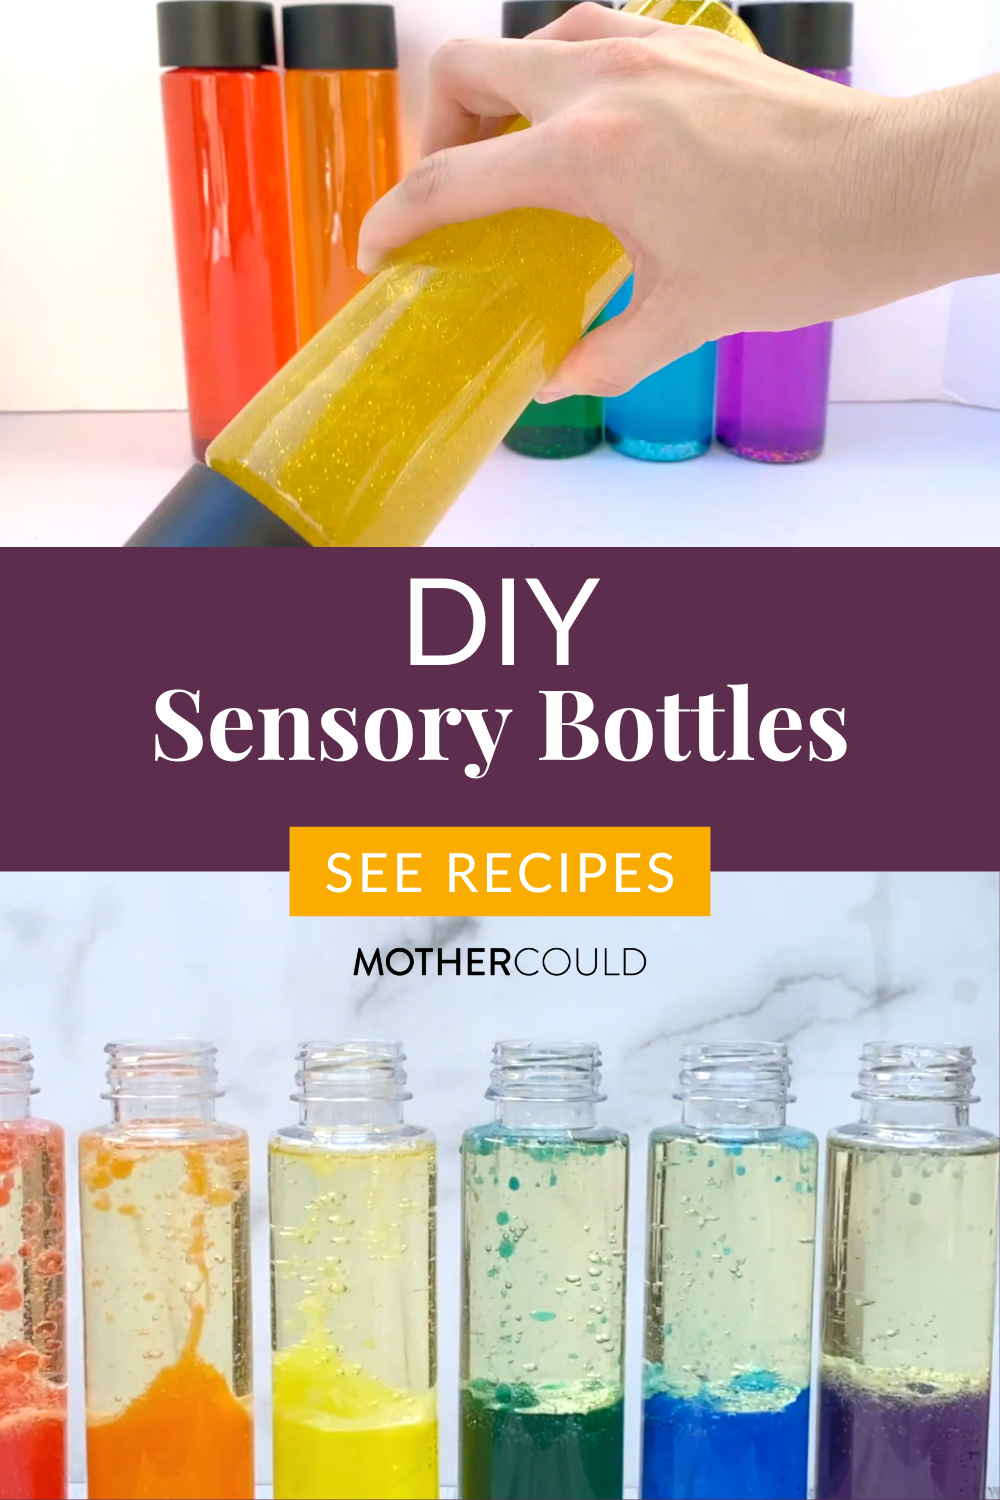 7 easy sensory bottle ideas